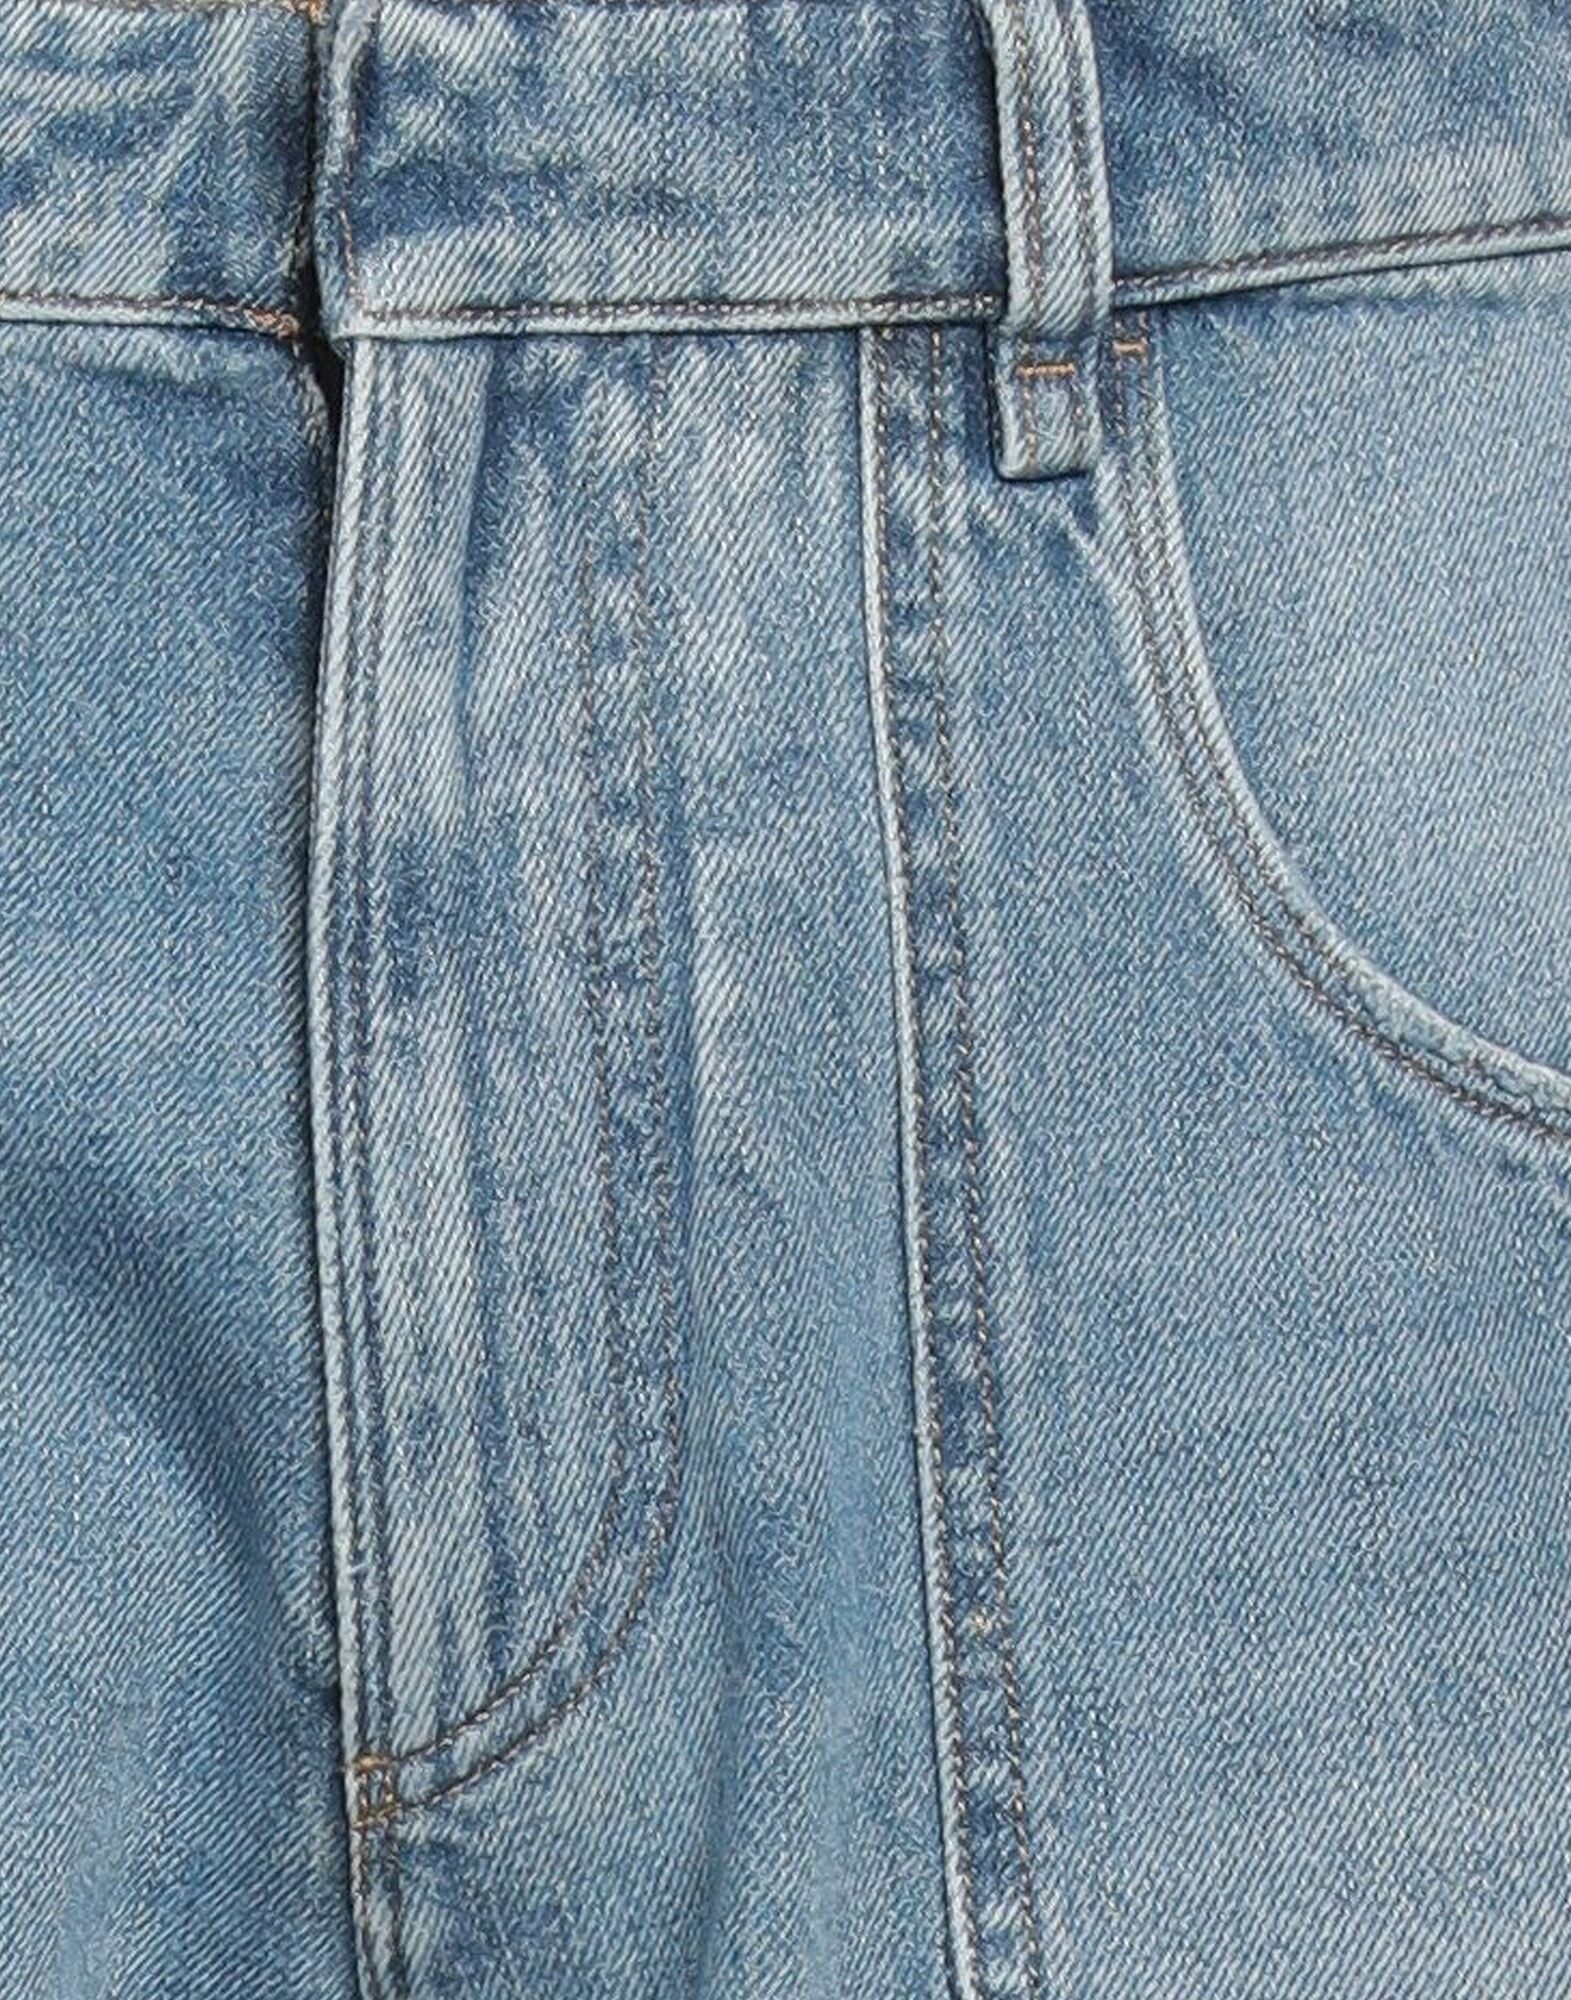 Blue Men's Denim Shorts - 4